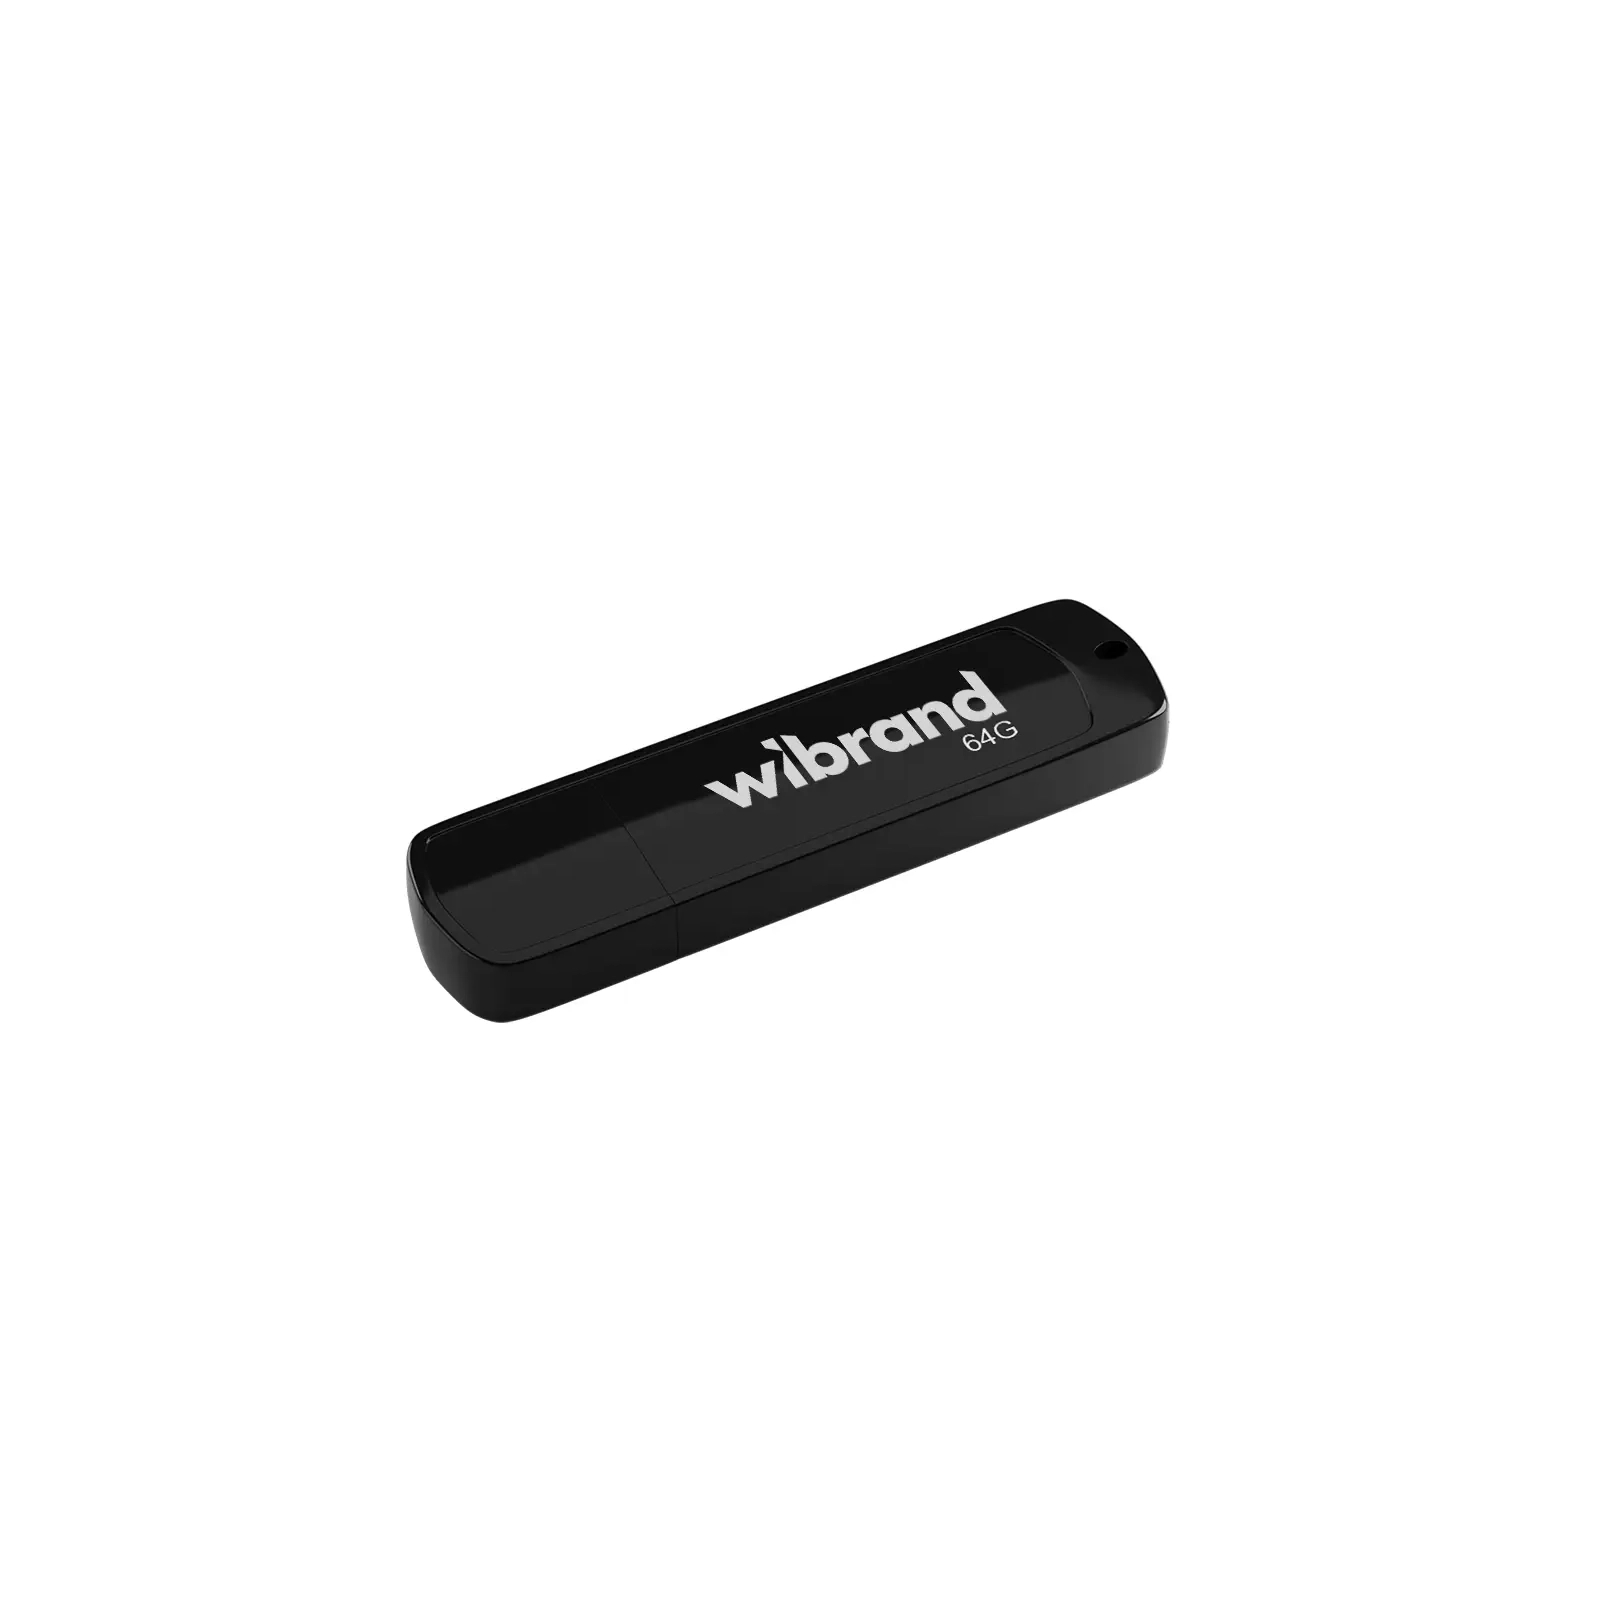 USB флеш накопитель Wibrand 64GB Grizzly Black USB 2.0 (WI2.0/GR64P3B)